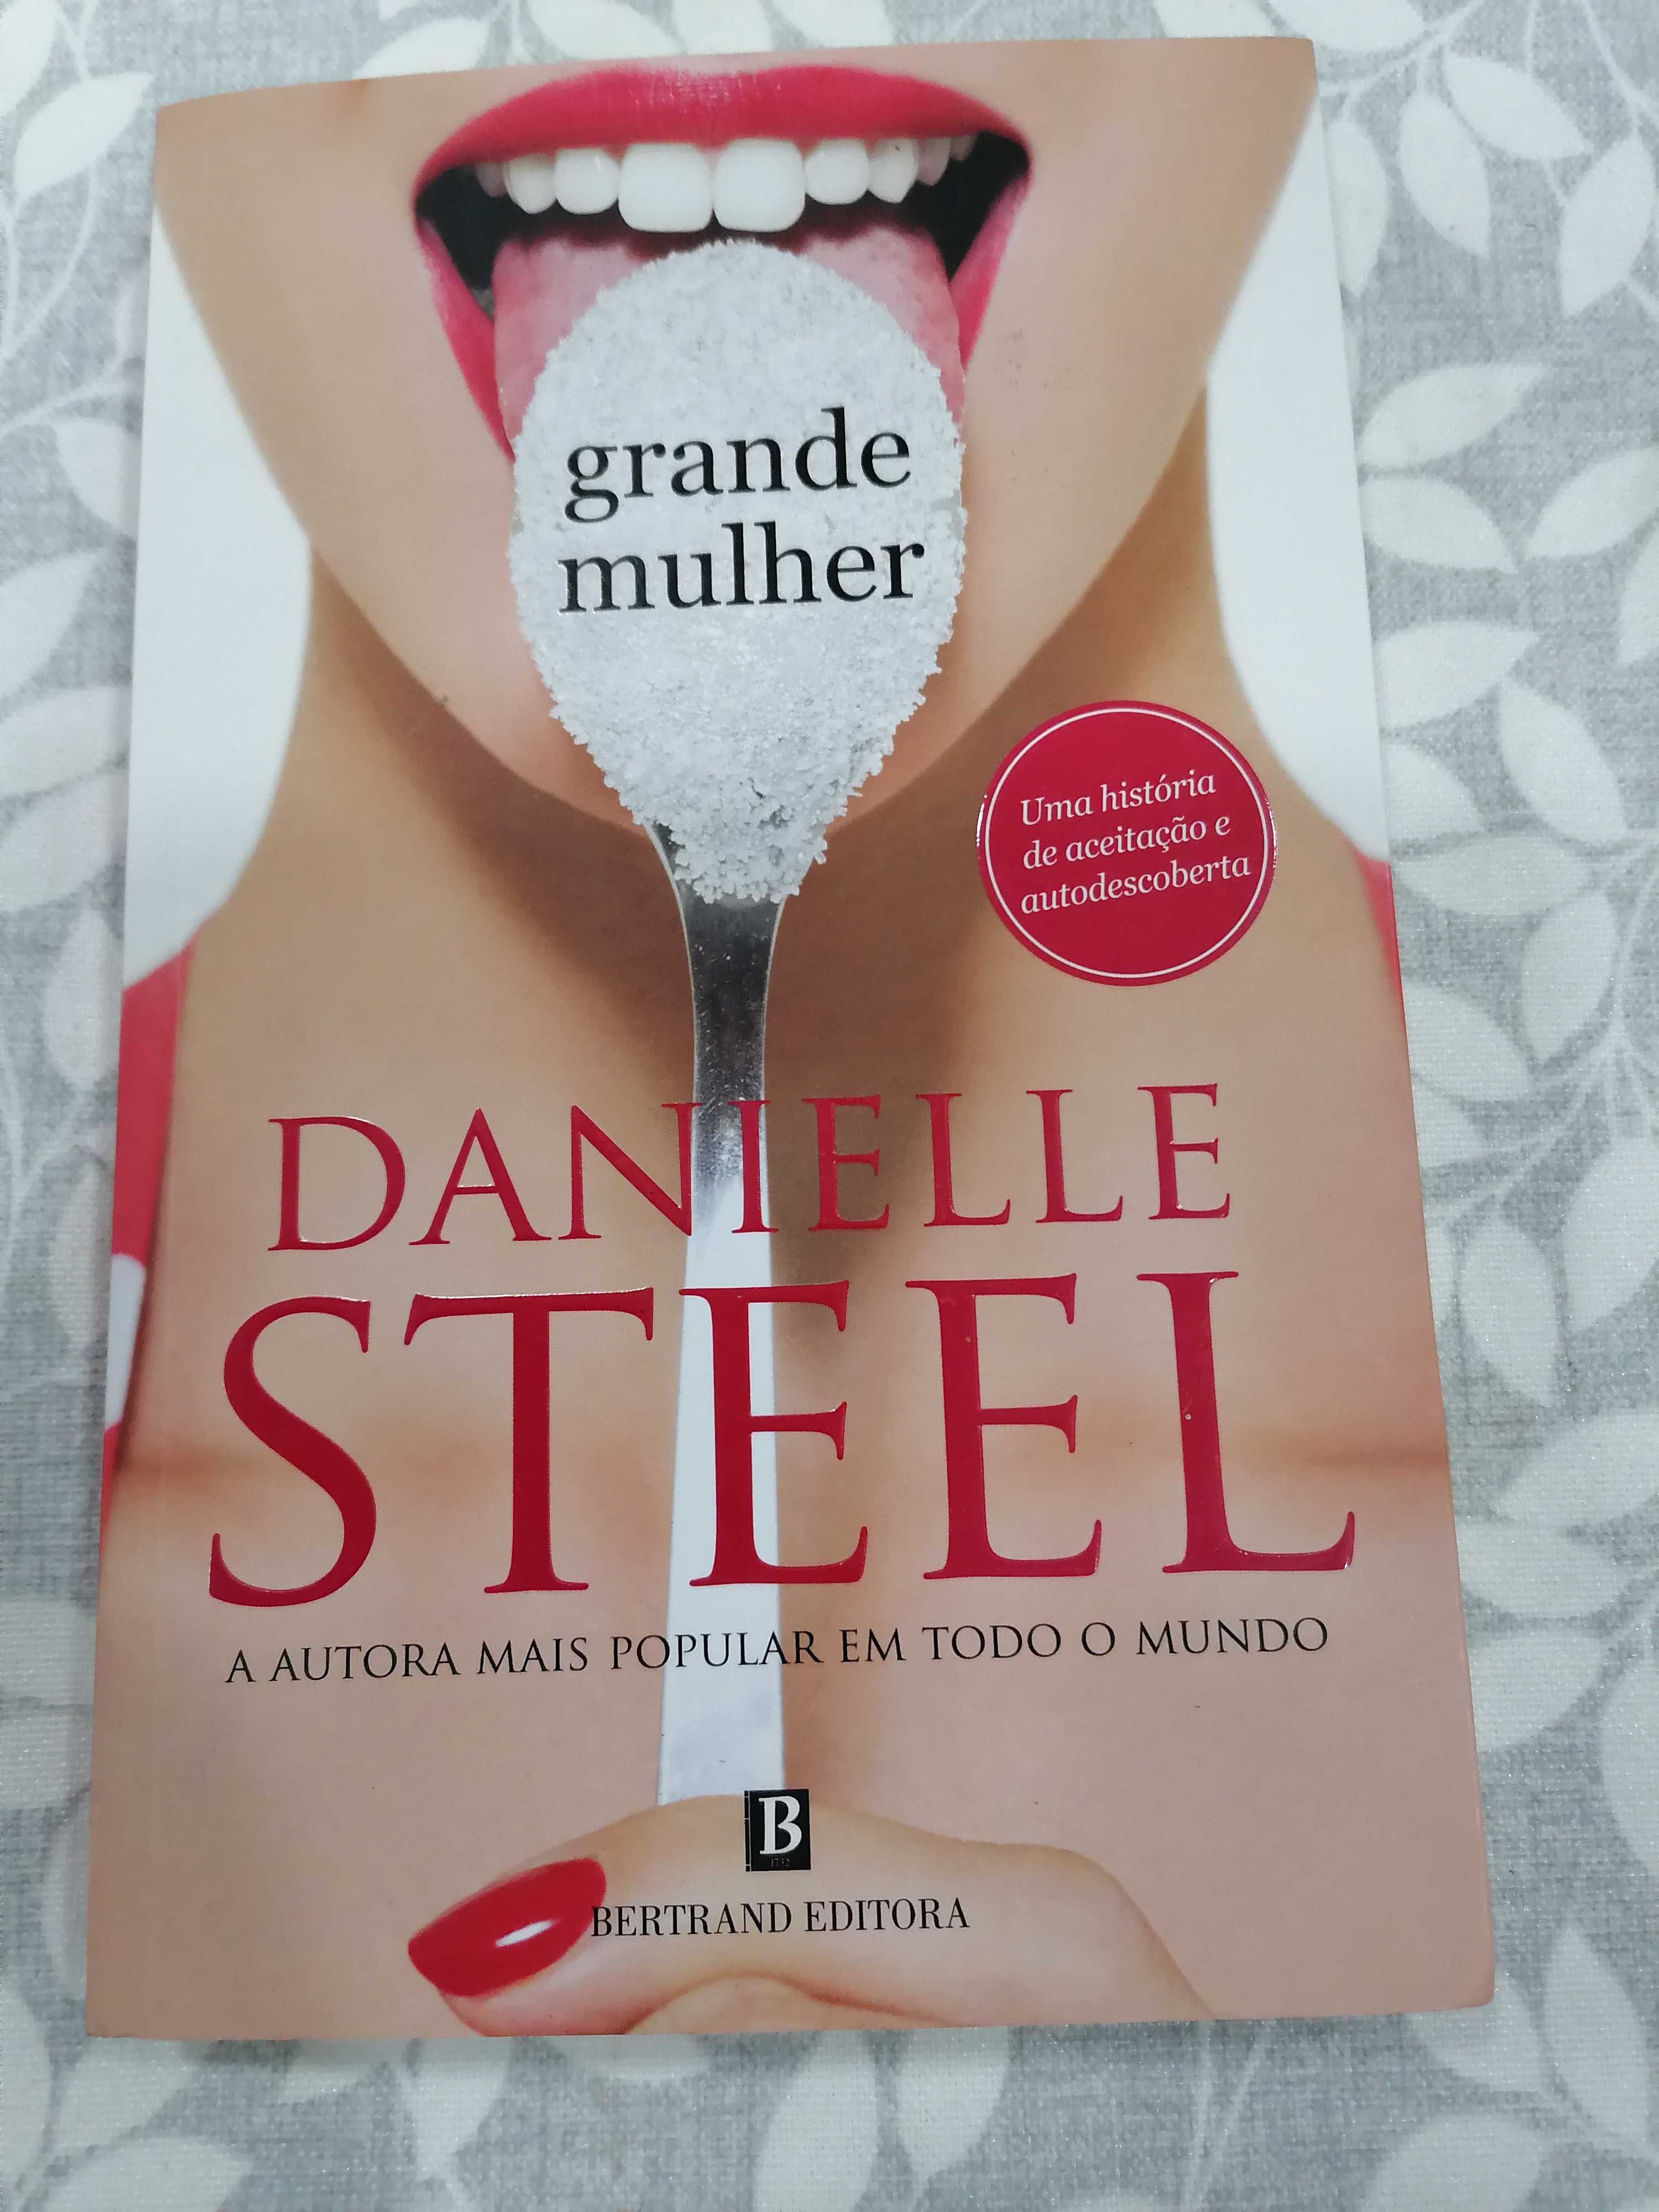 Livro "Grande Mulher" de Danielle Stell